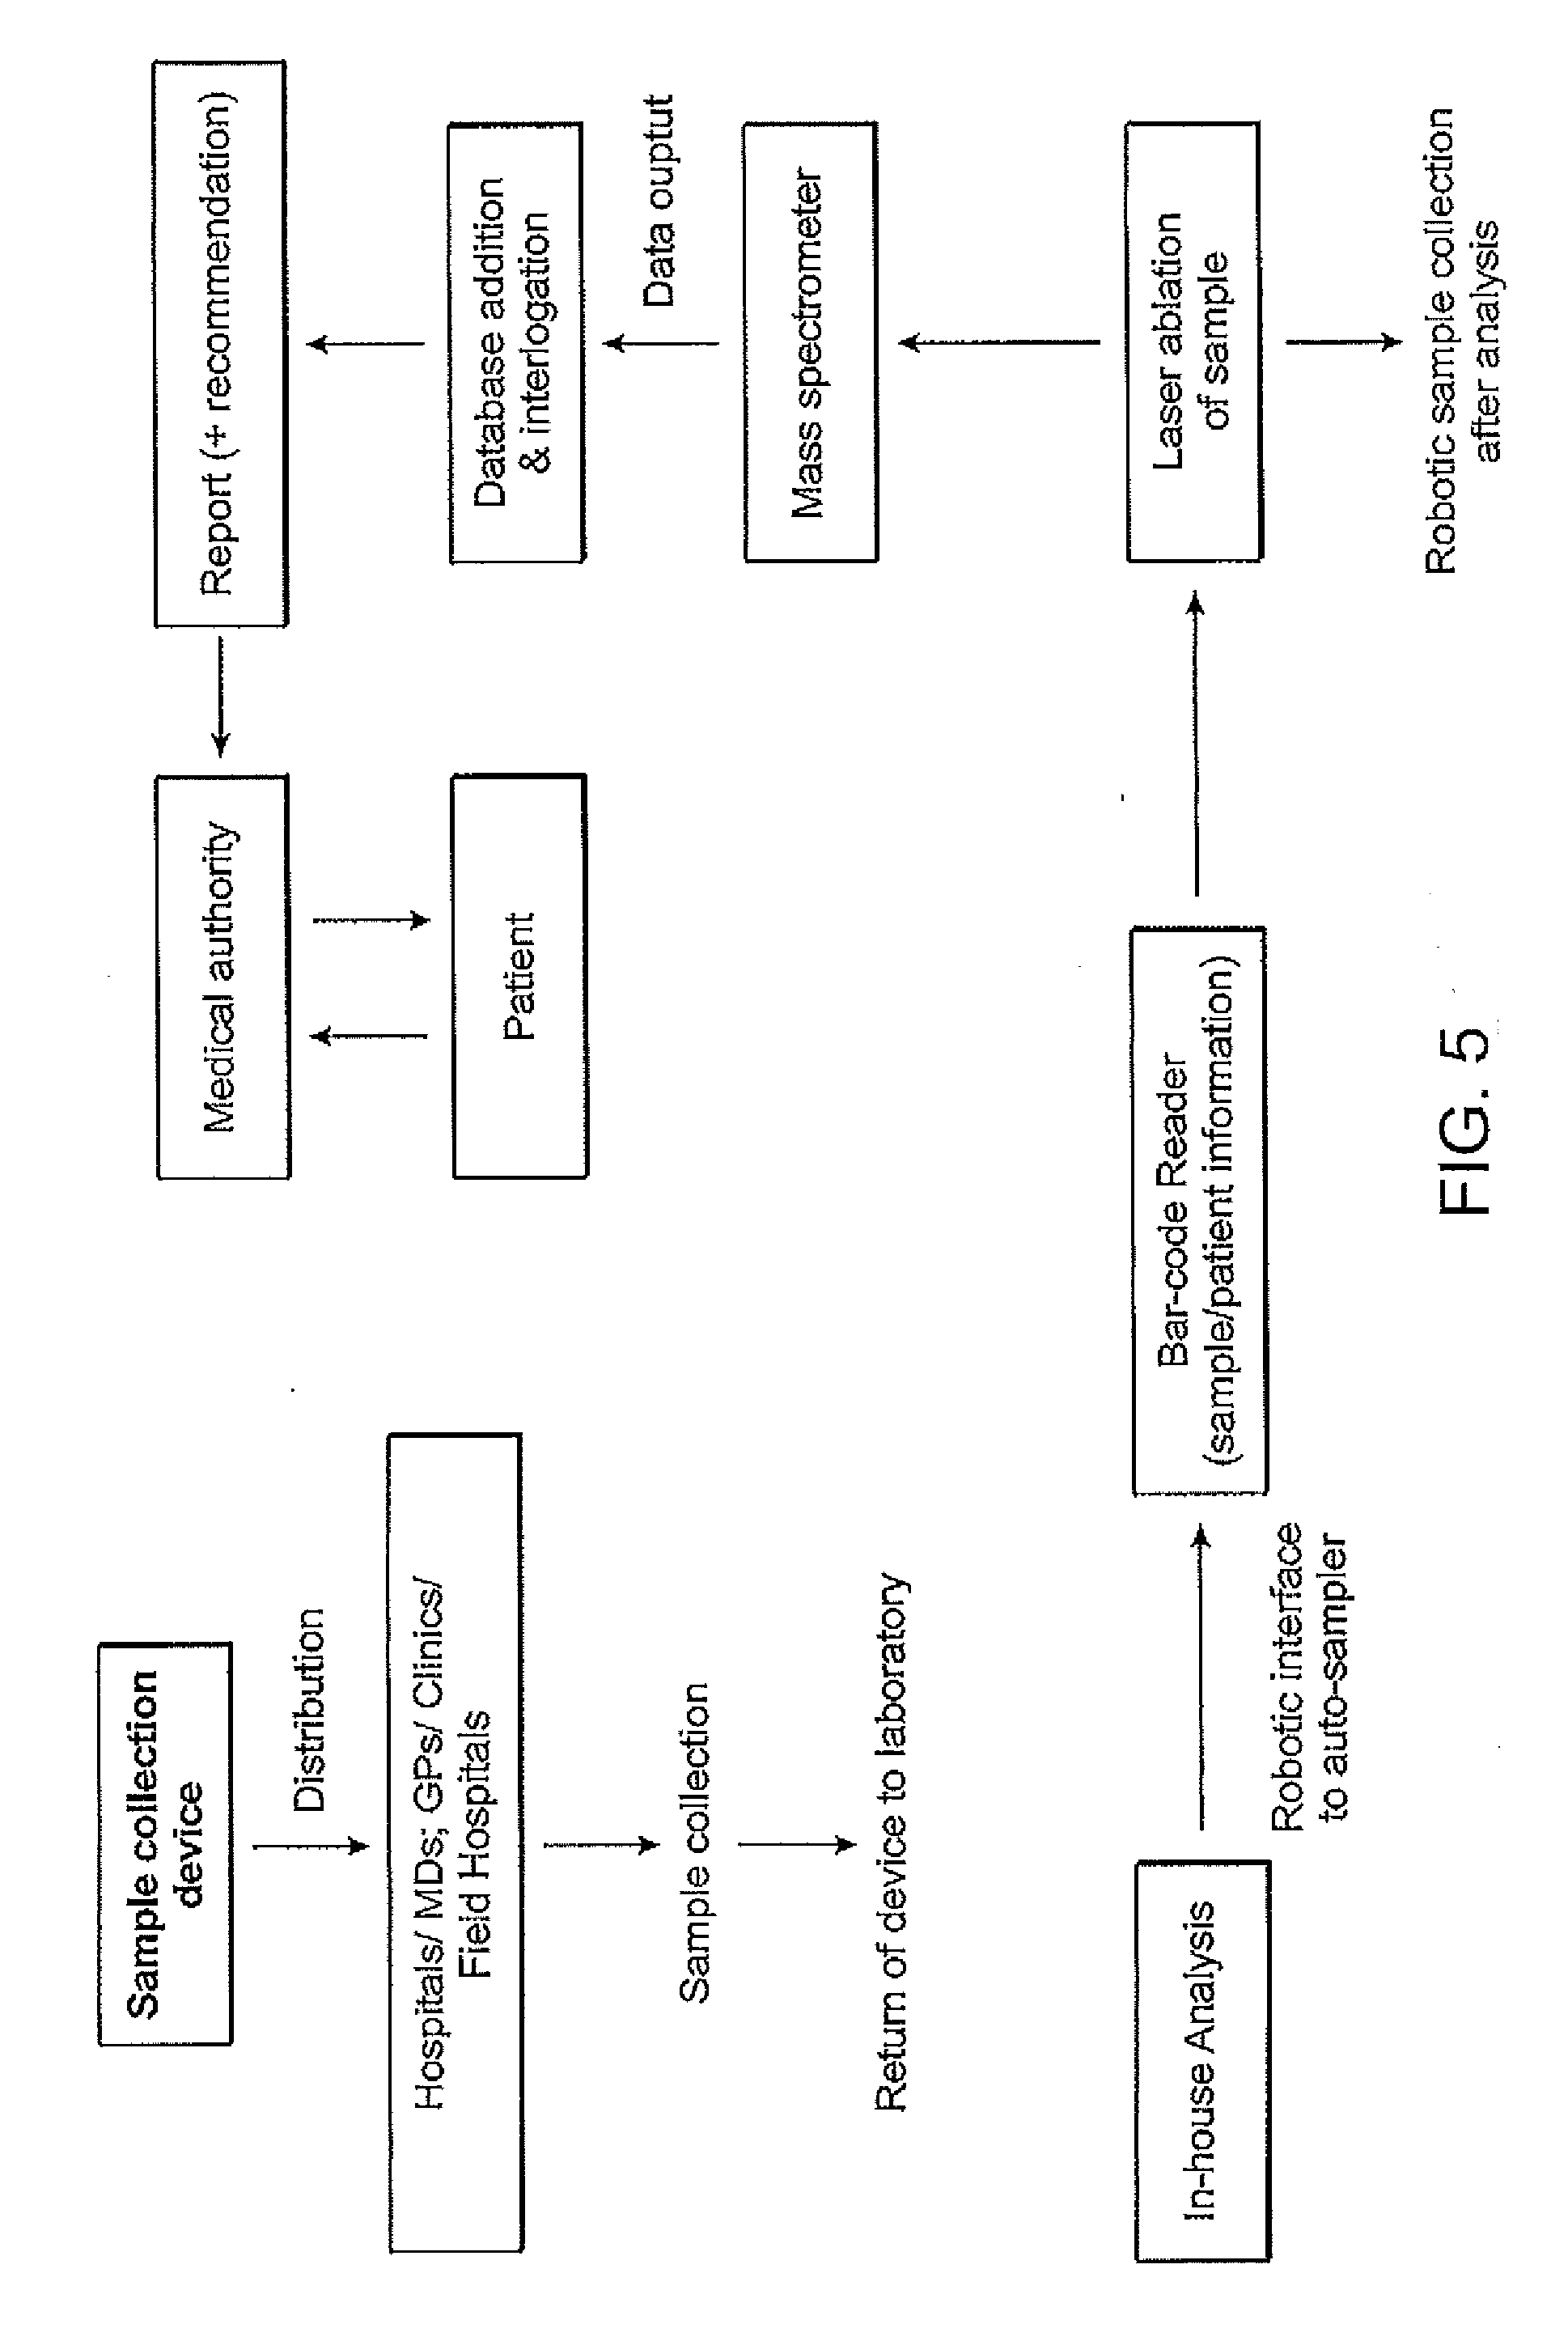 Multi-element screening of trace elements